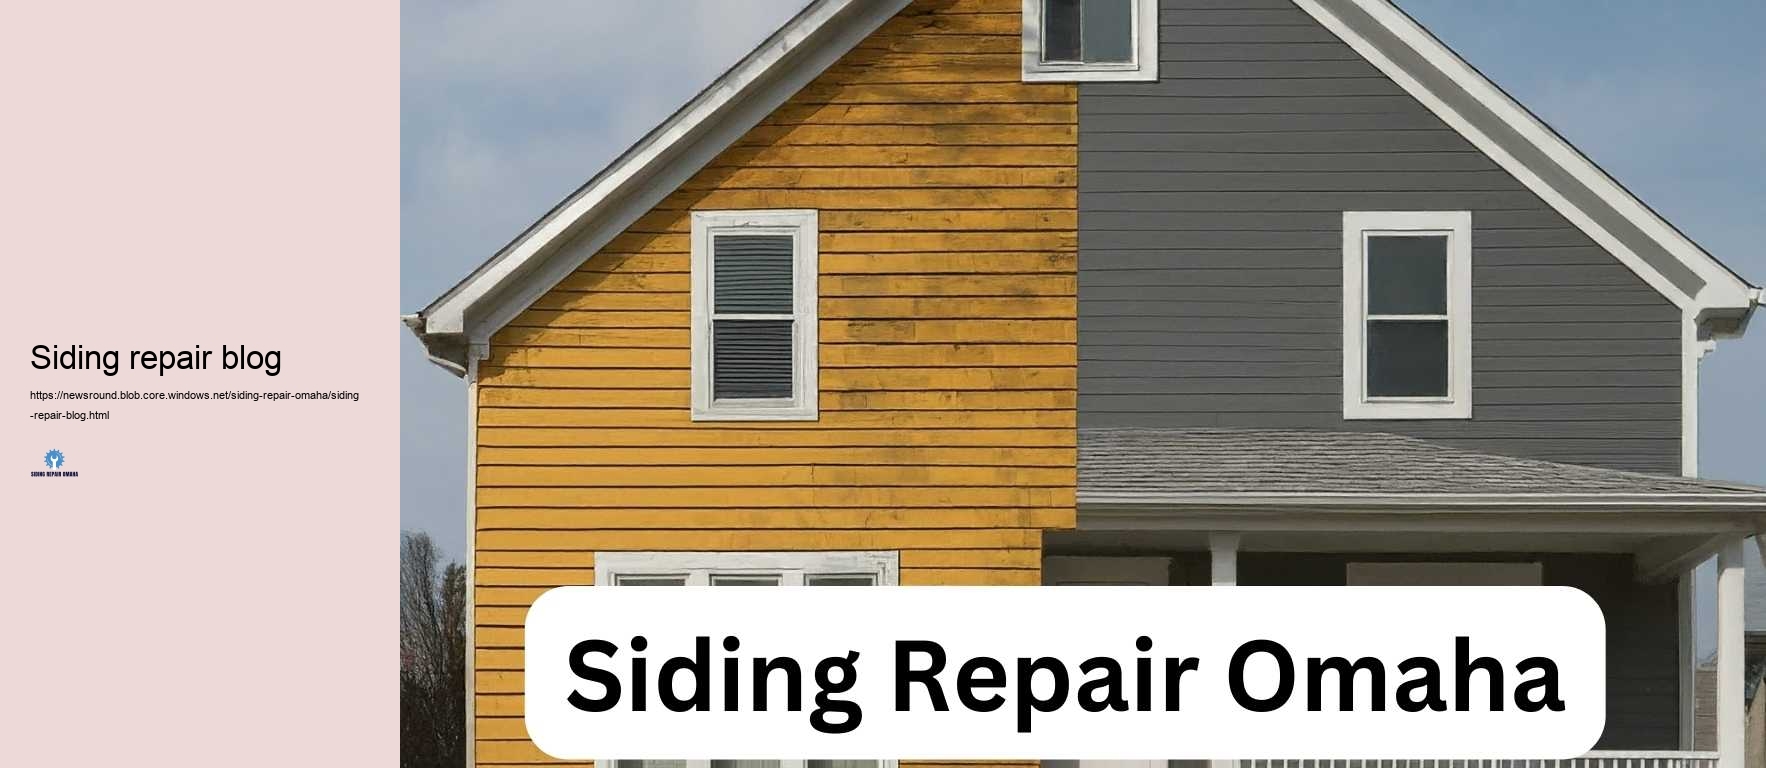 Siding repair blog